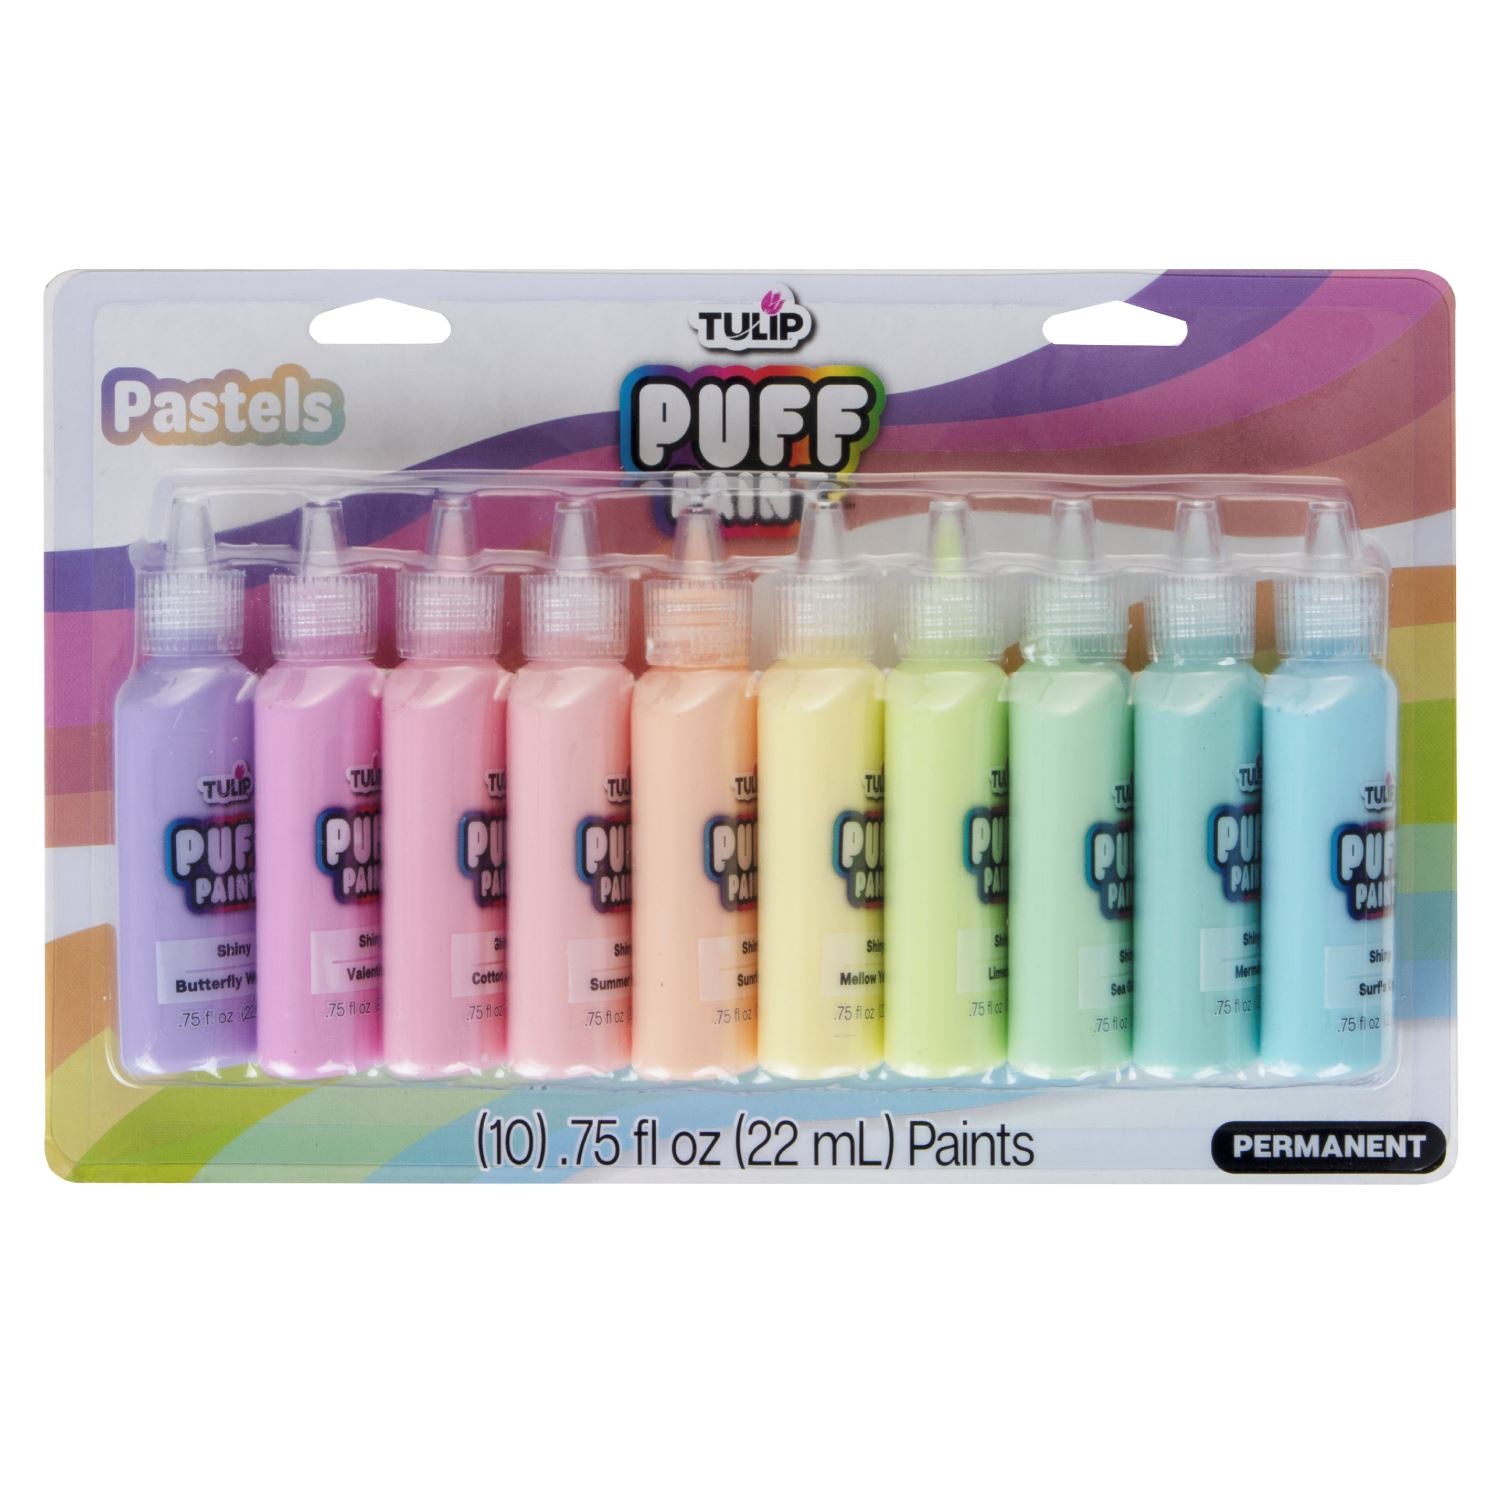 Tulip Puff Paint Pastels Shiny .75 fl oz 10 Pack - 1